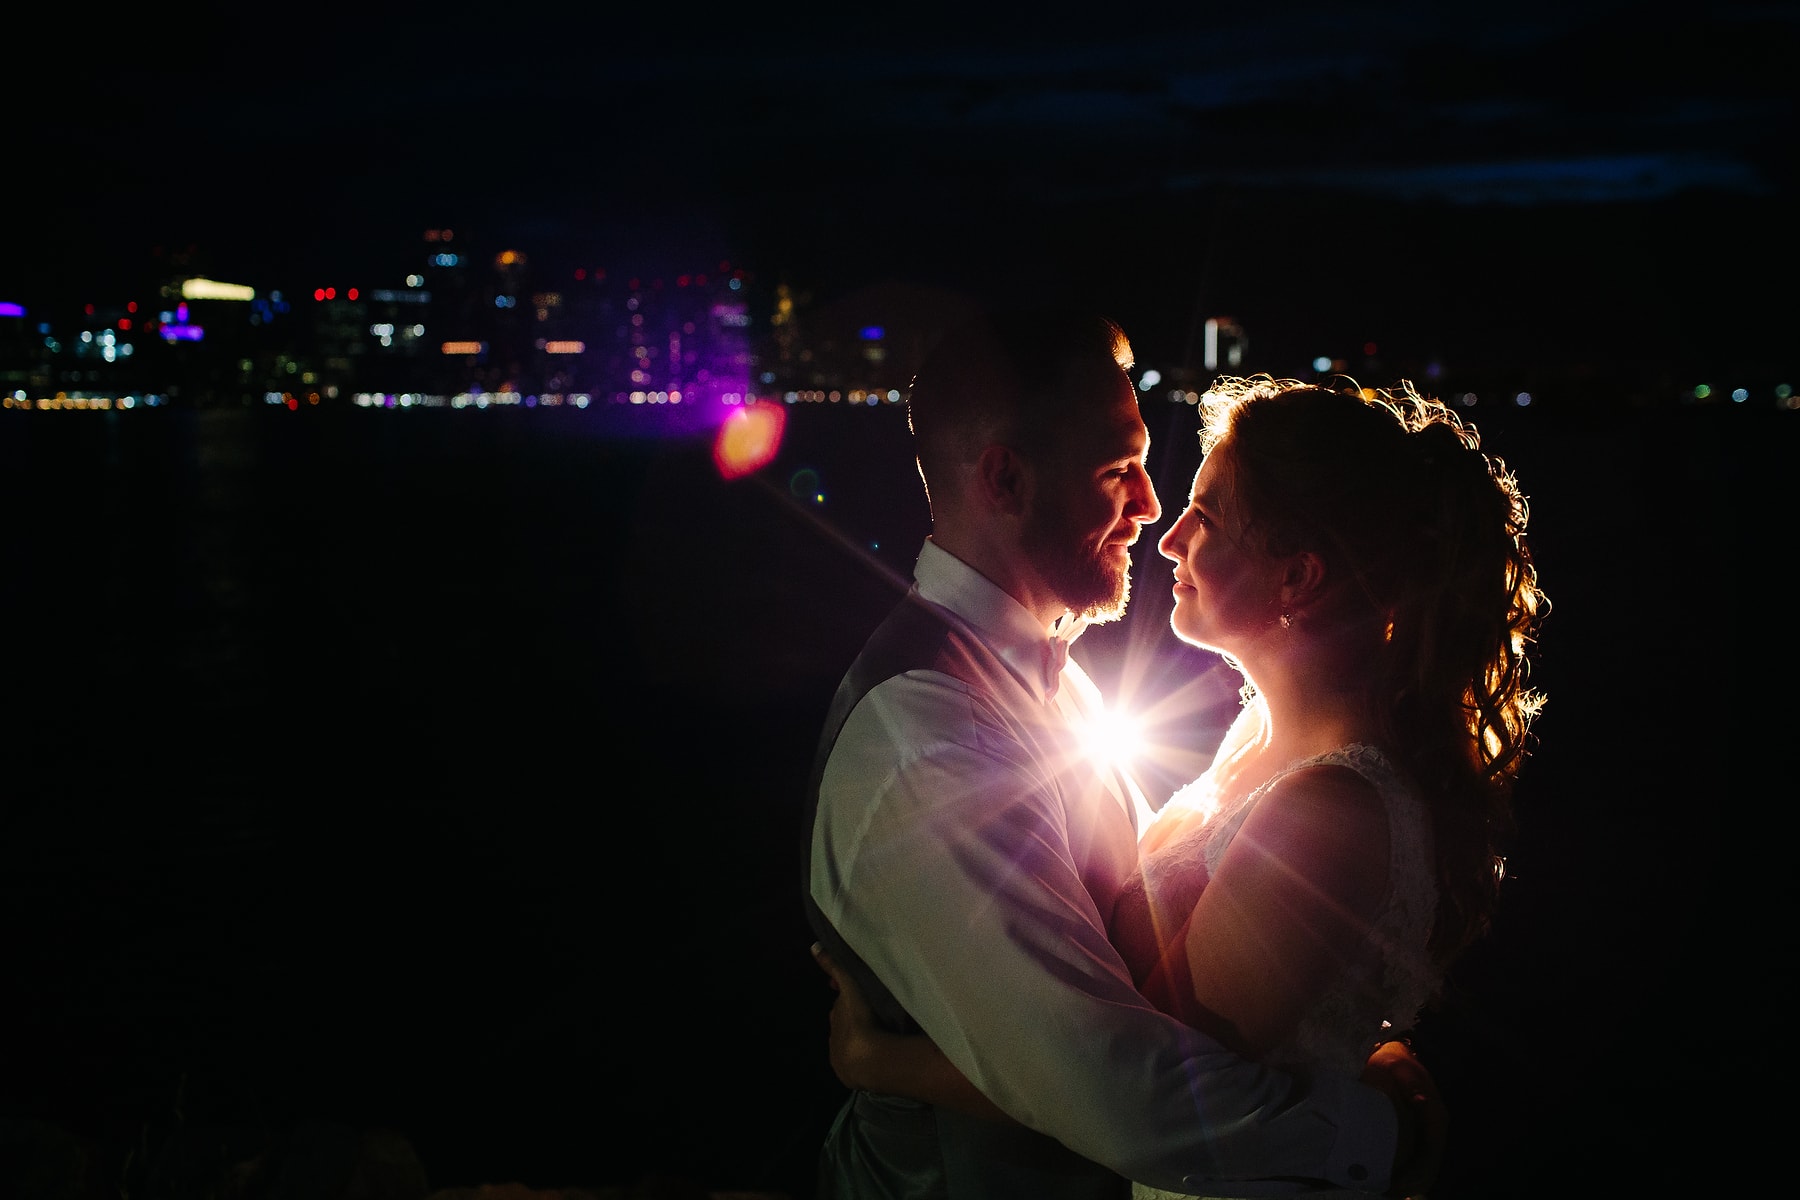 Peggy and Anthony's Hyatt Harborside Boston wedding | Kelly Benvenuto Photography | Boston Wedding Photographer